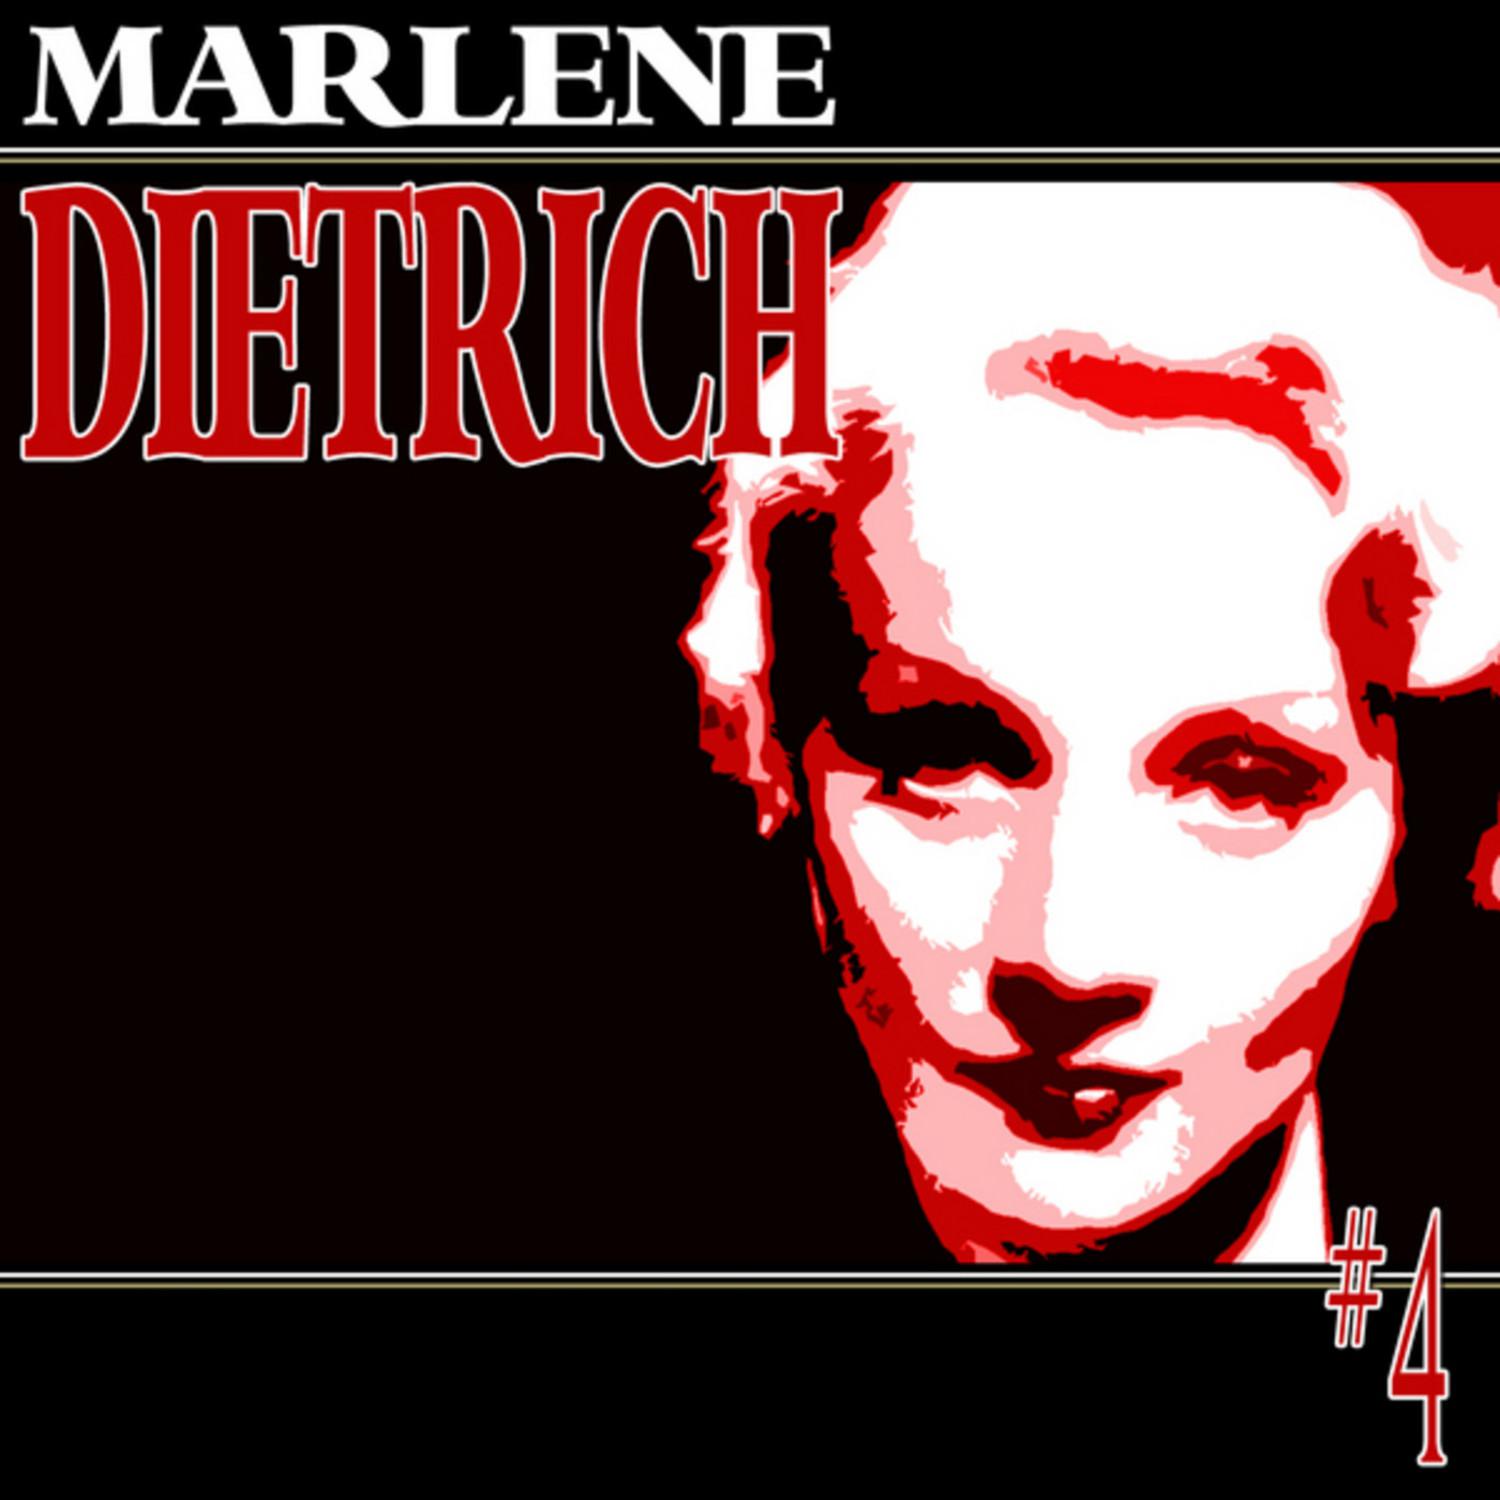 The Great Marlene Dietrich #4